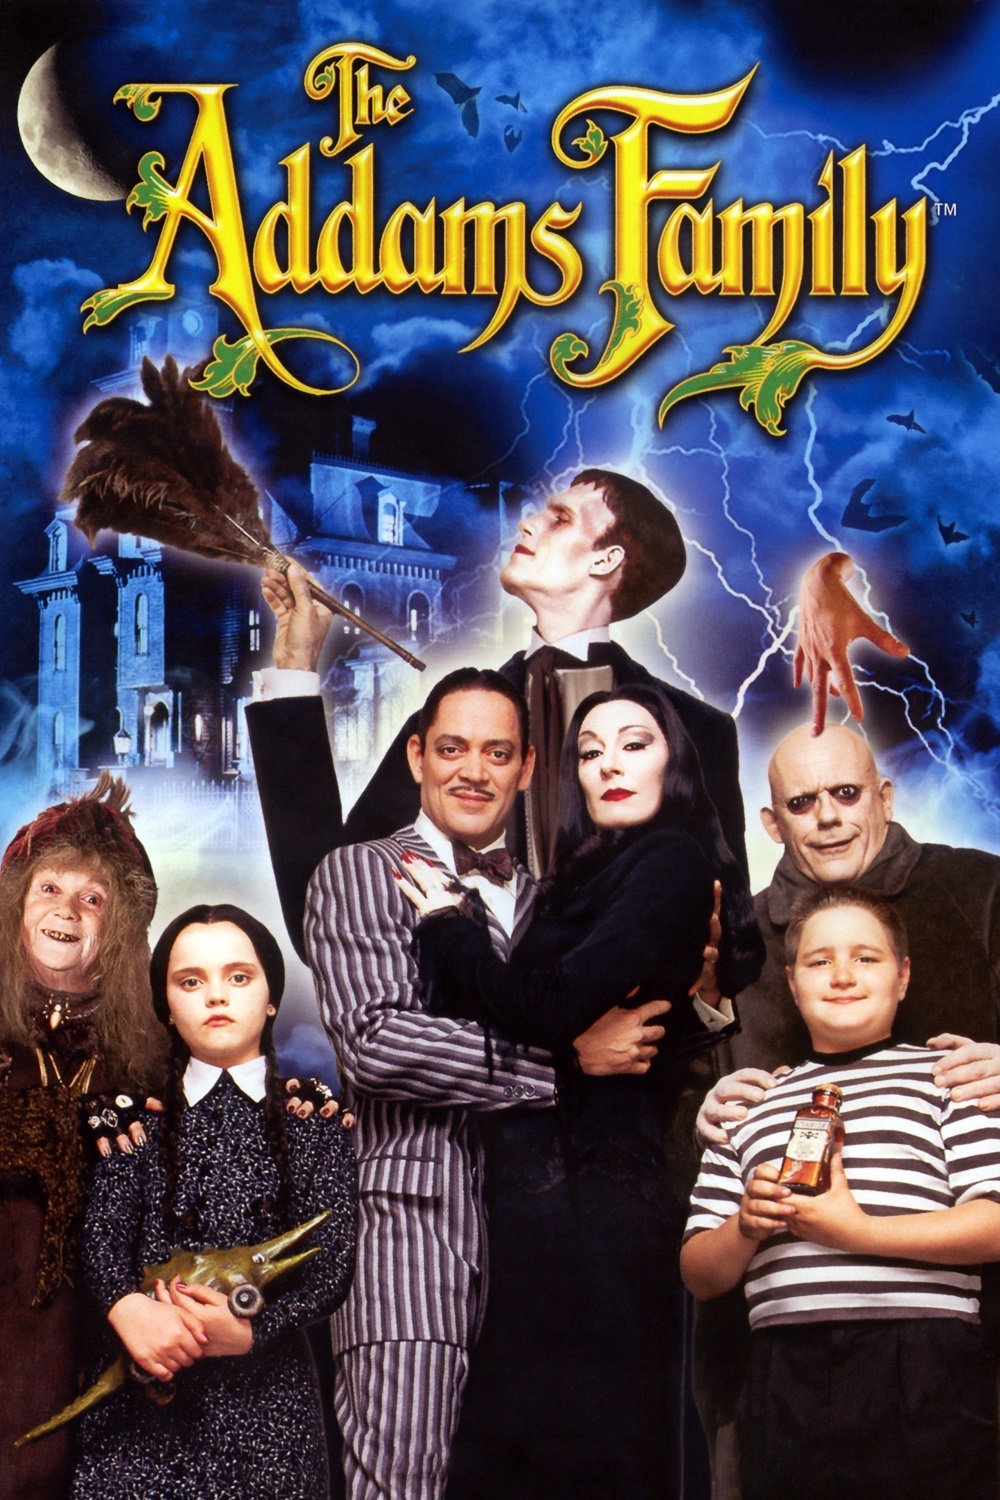 Cineclube Badesc exibe "A família Addams", de Barry Sonnenfeld